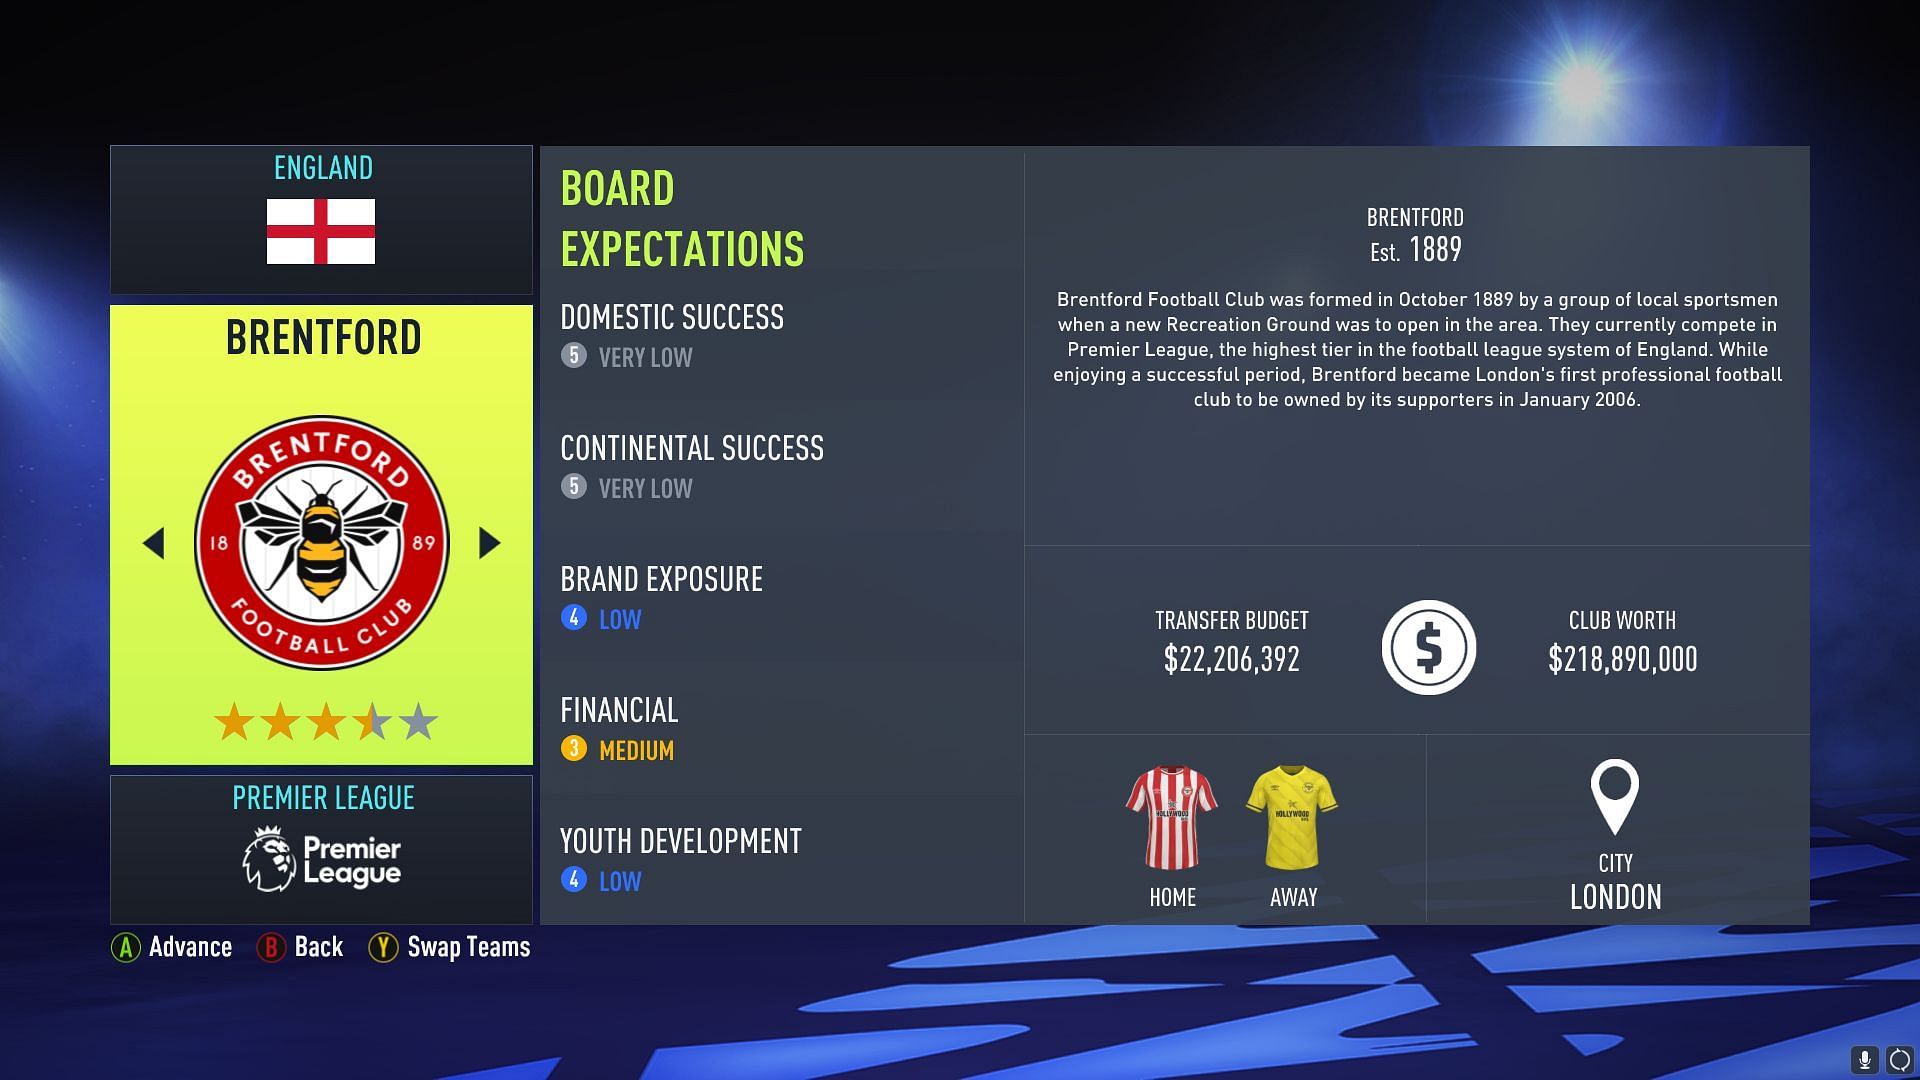 Brentford has medium financial expectations on FIFA 22 Career Mode (Image via Sportskeeda)